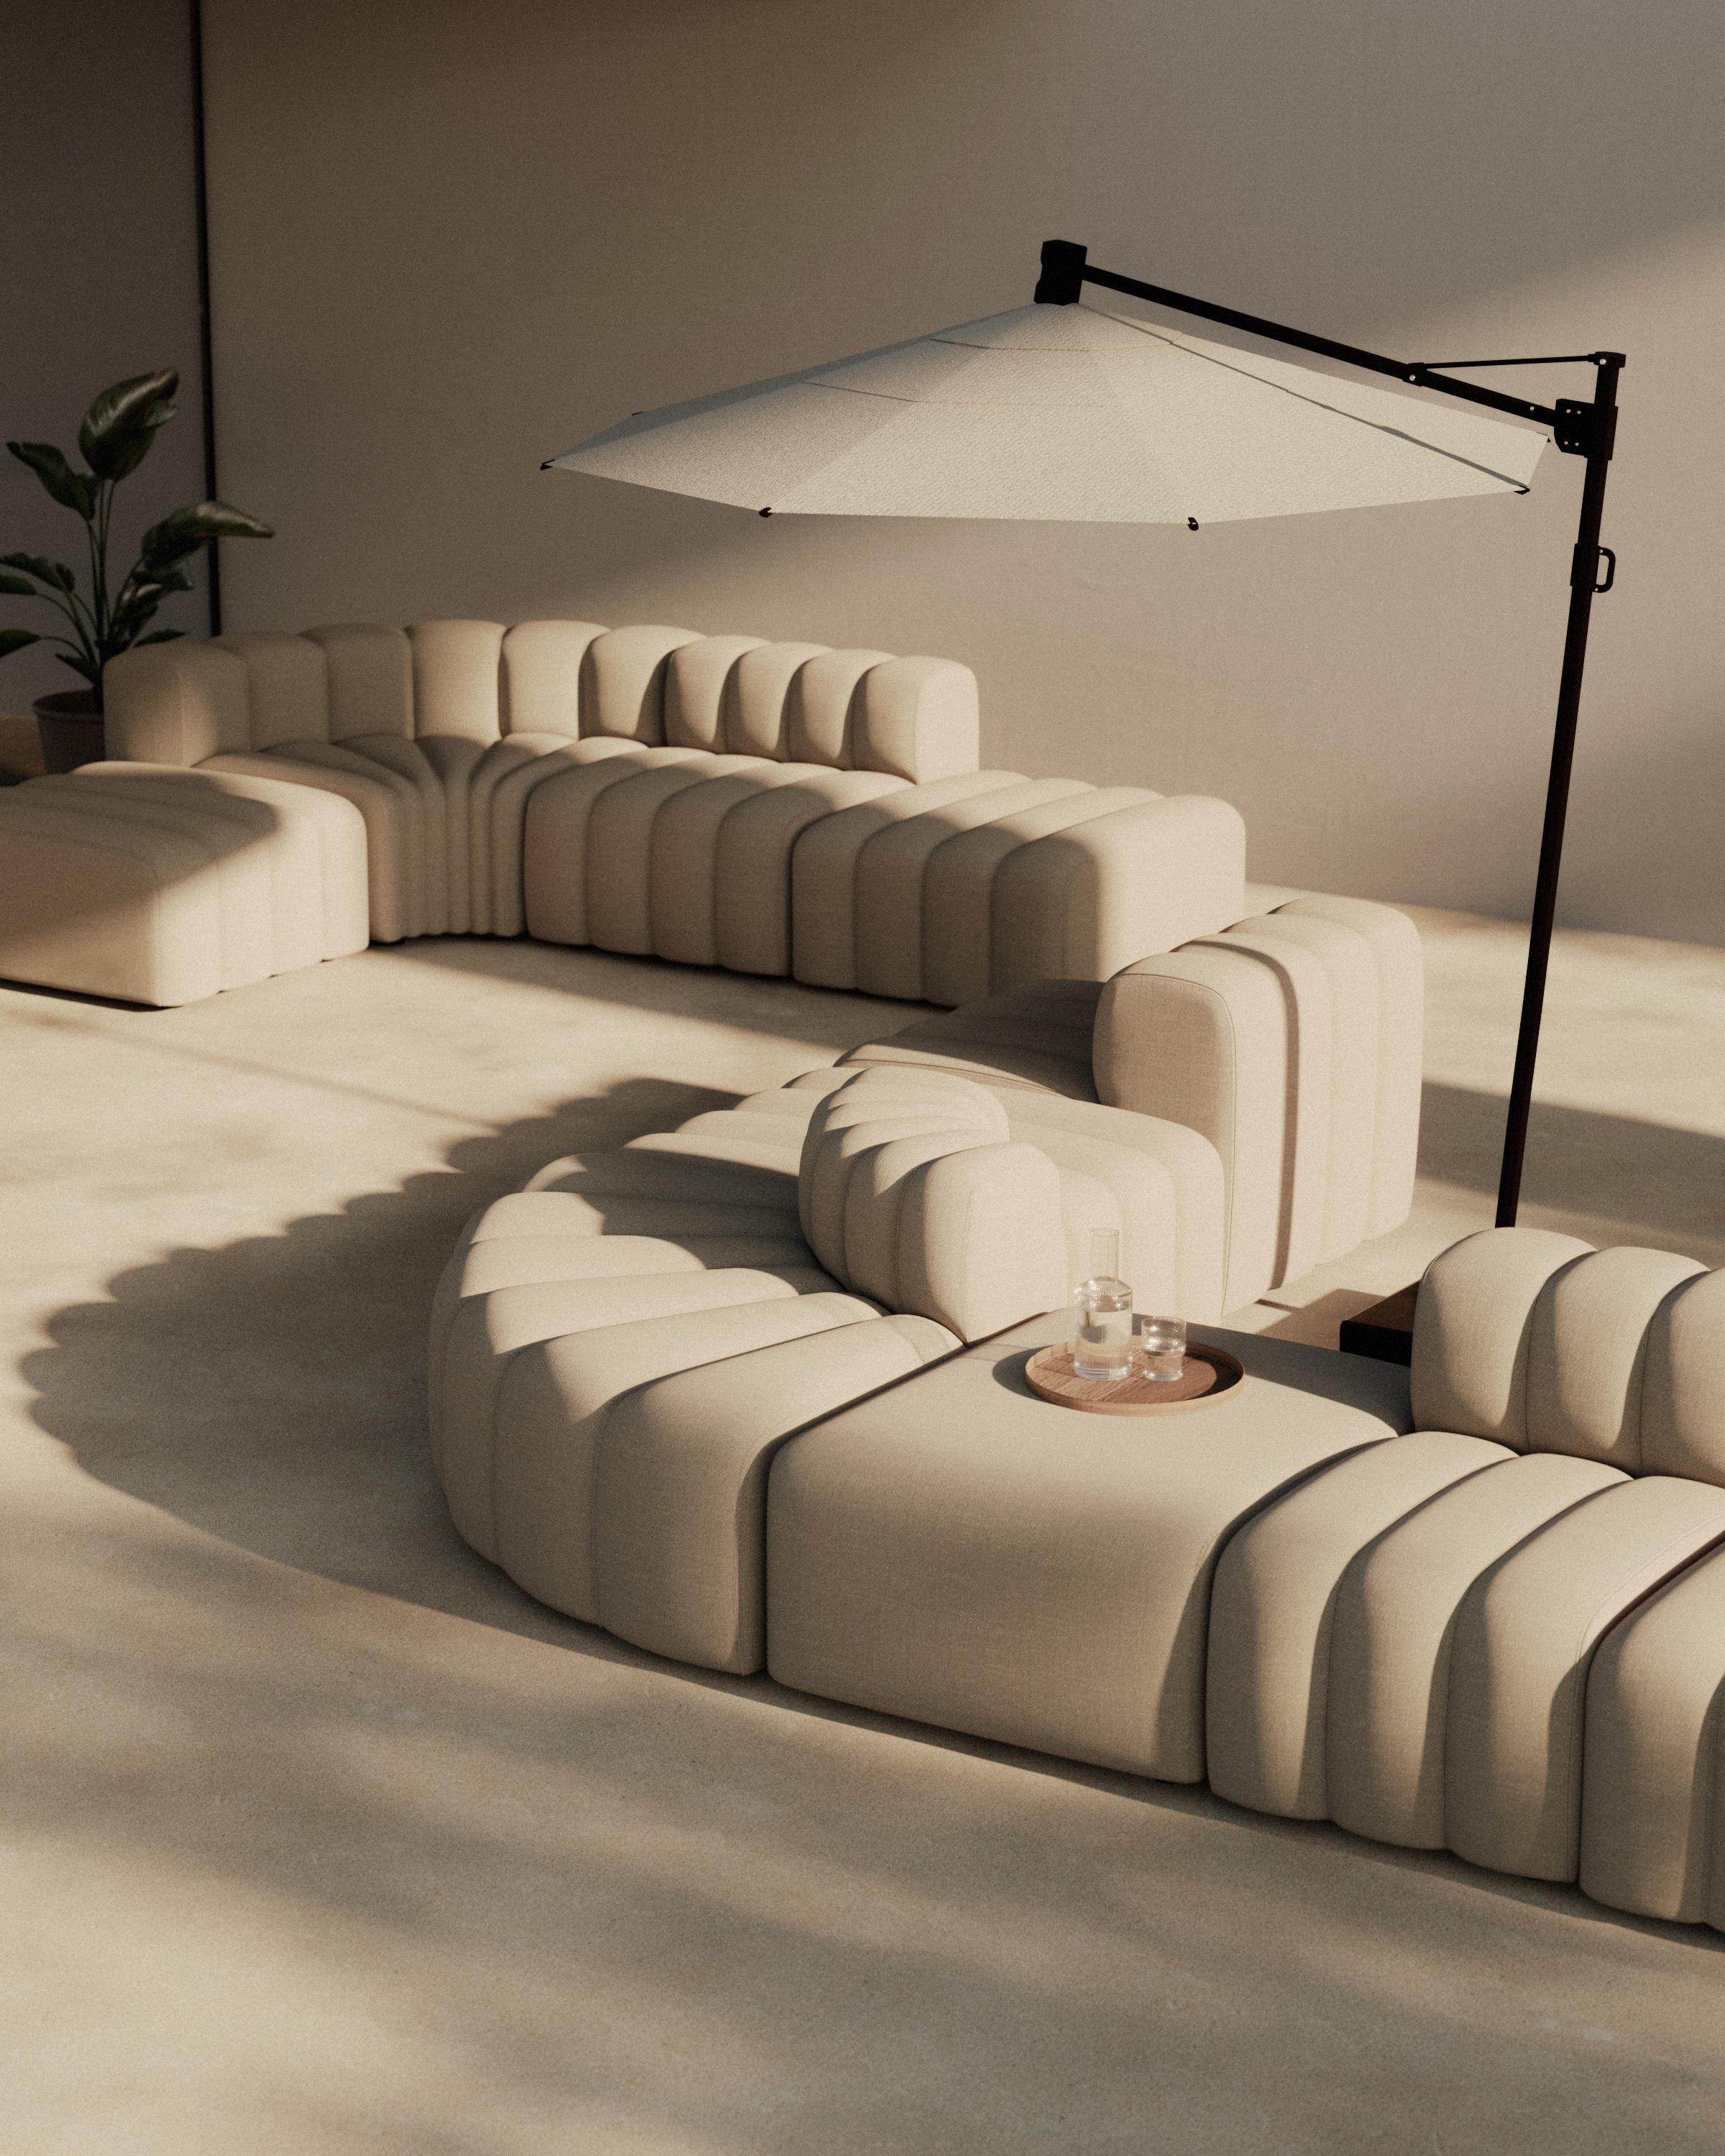 Danish Studio Medium Modular Outdoor Sofa by NORR11 For Sale